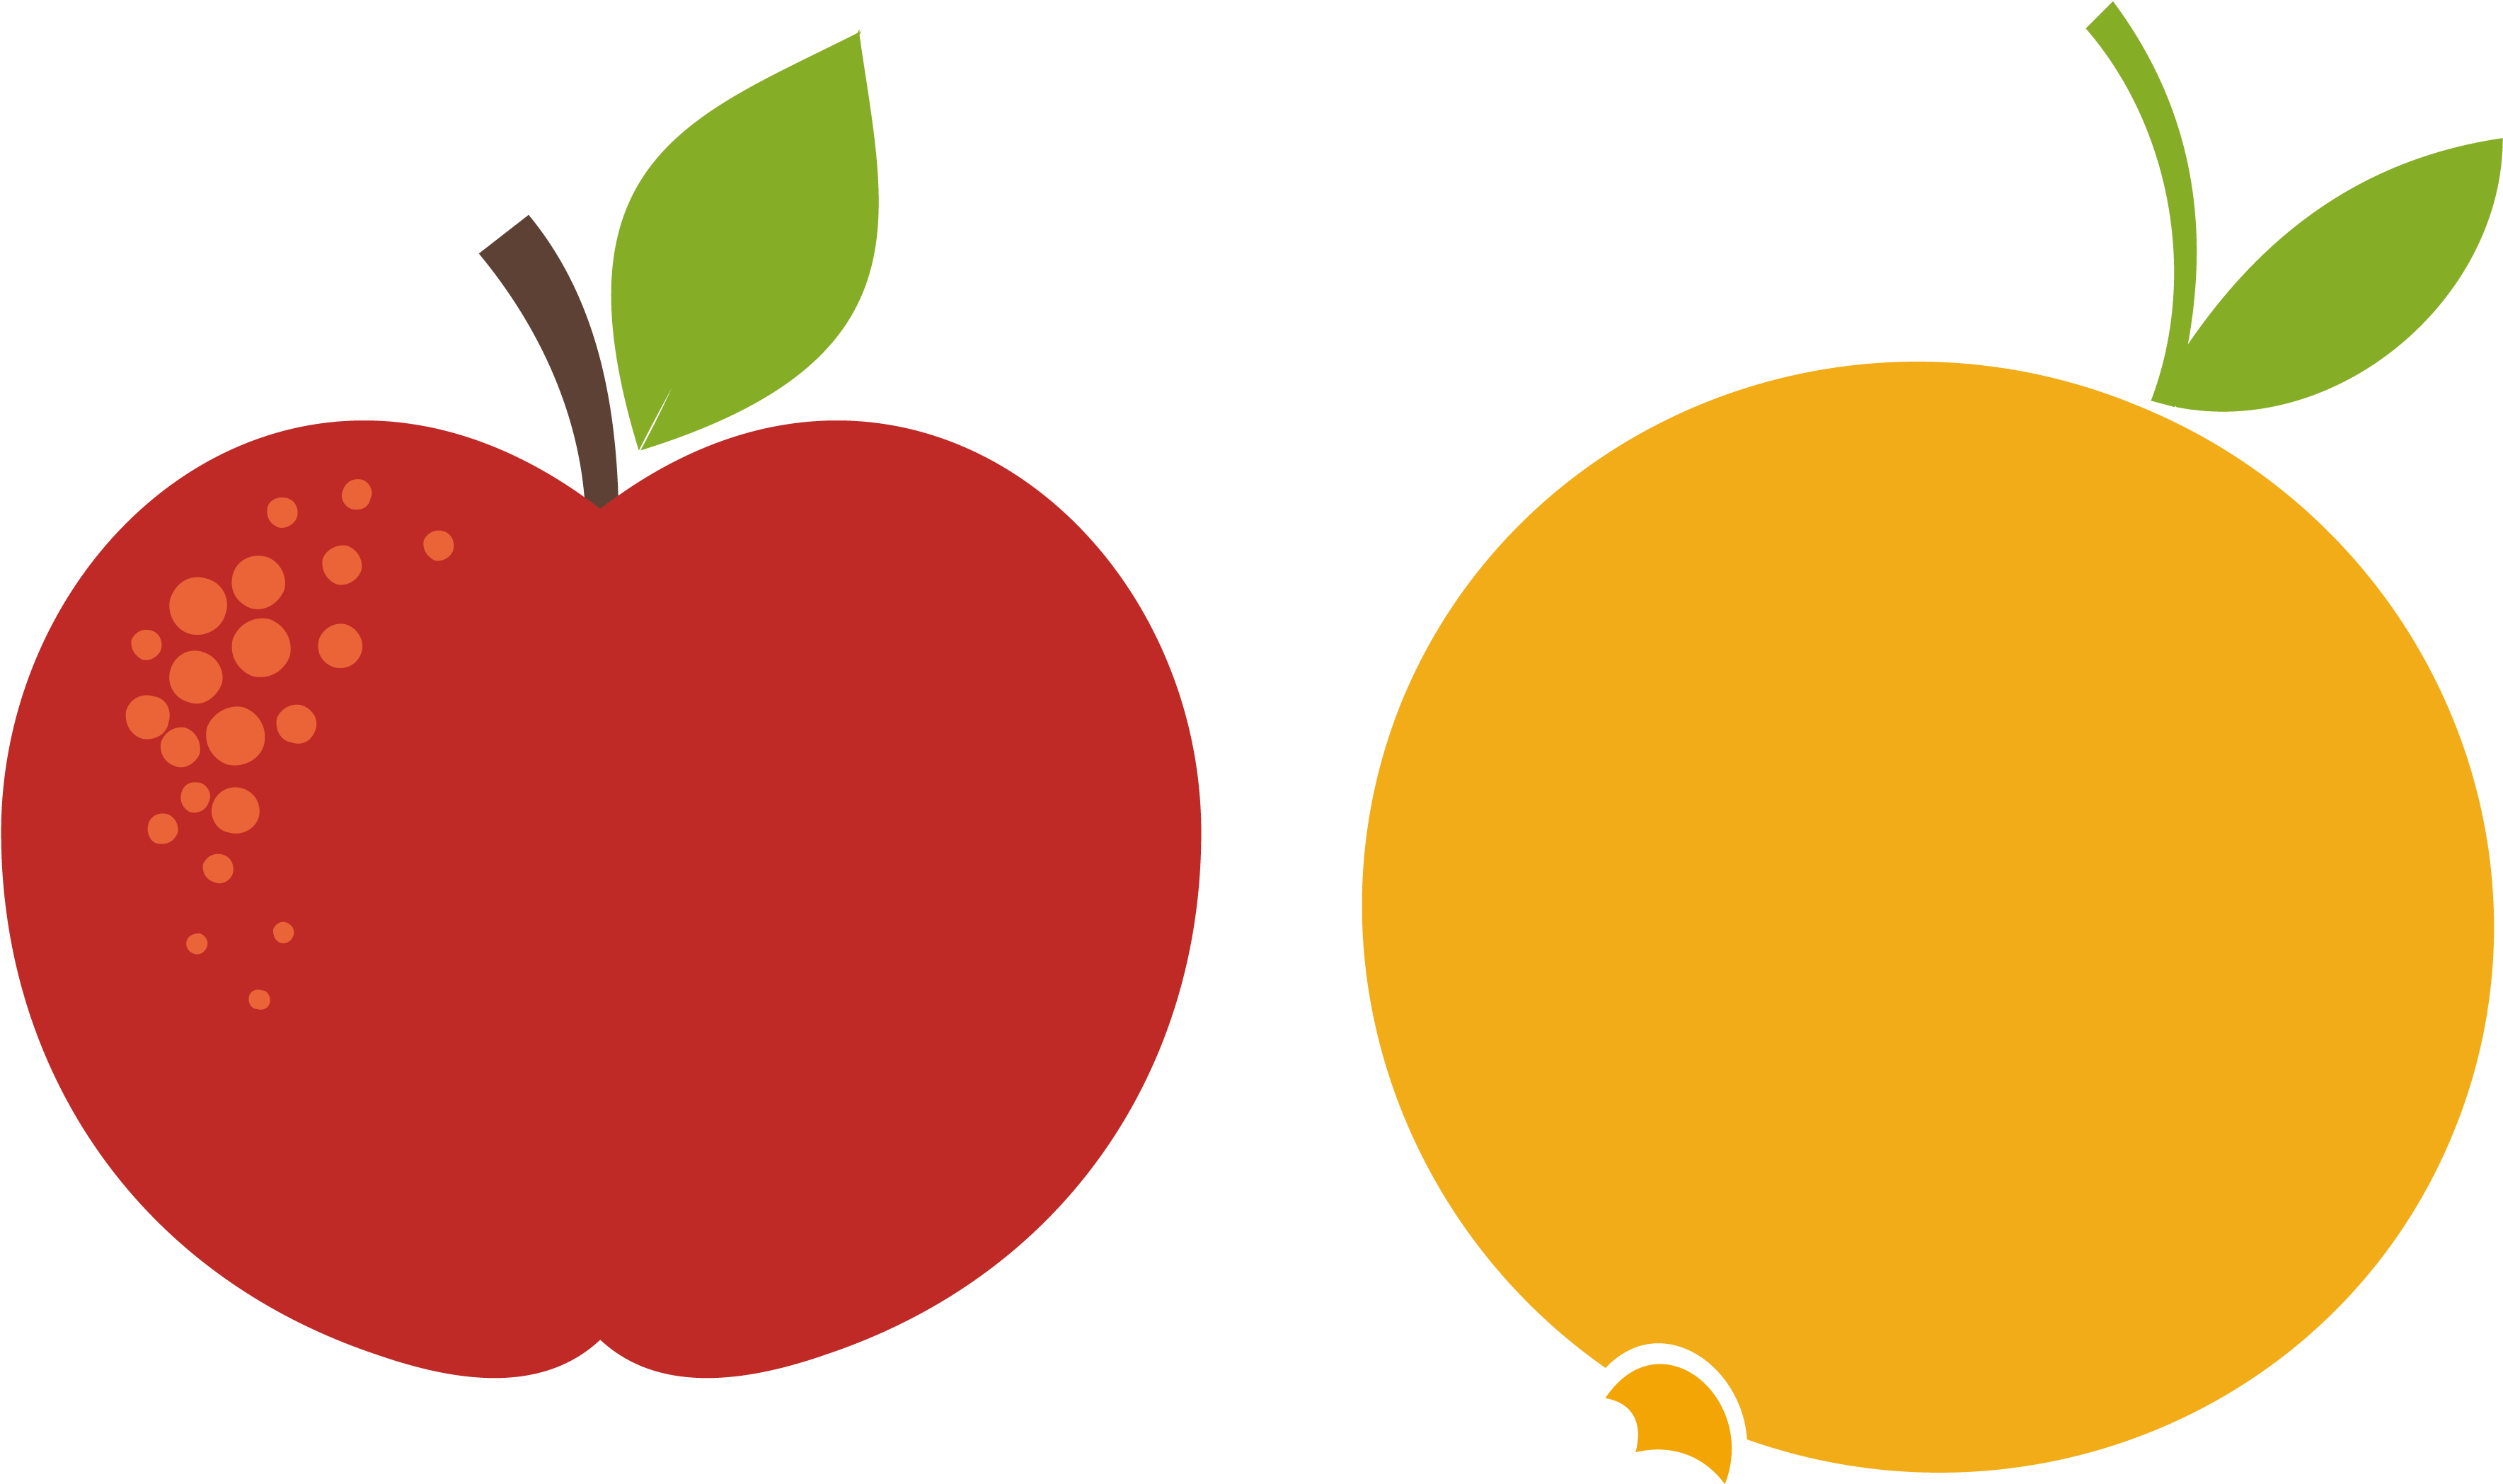 Apple Orange Red - Apples And Oranges Vector (3775x2450)